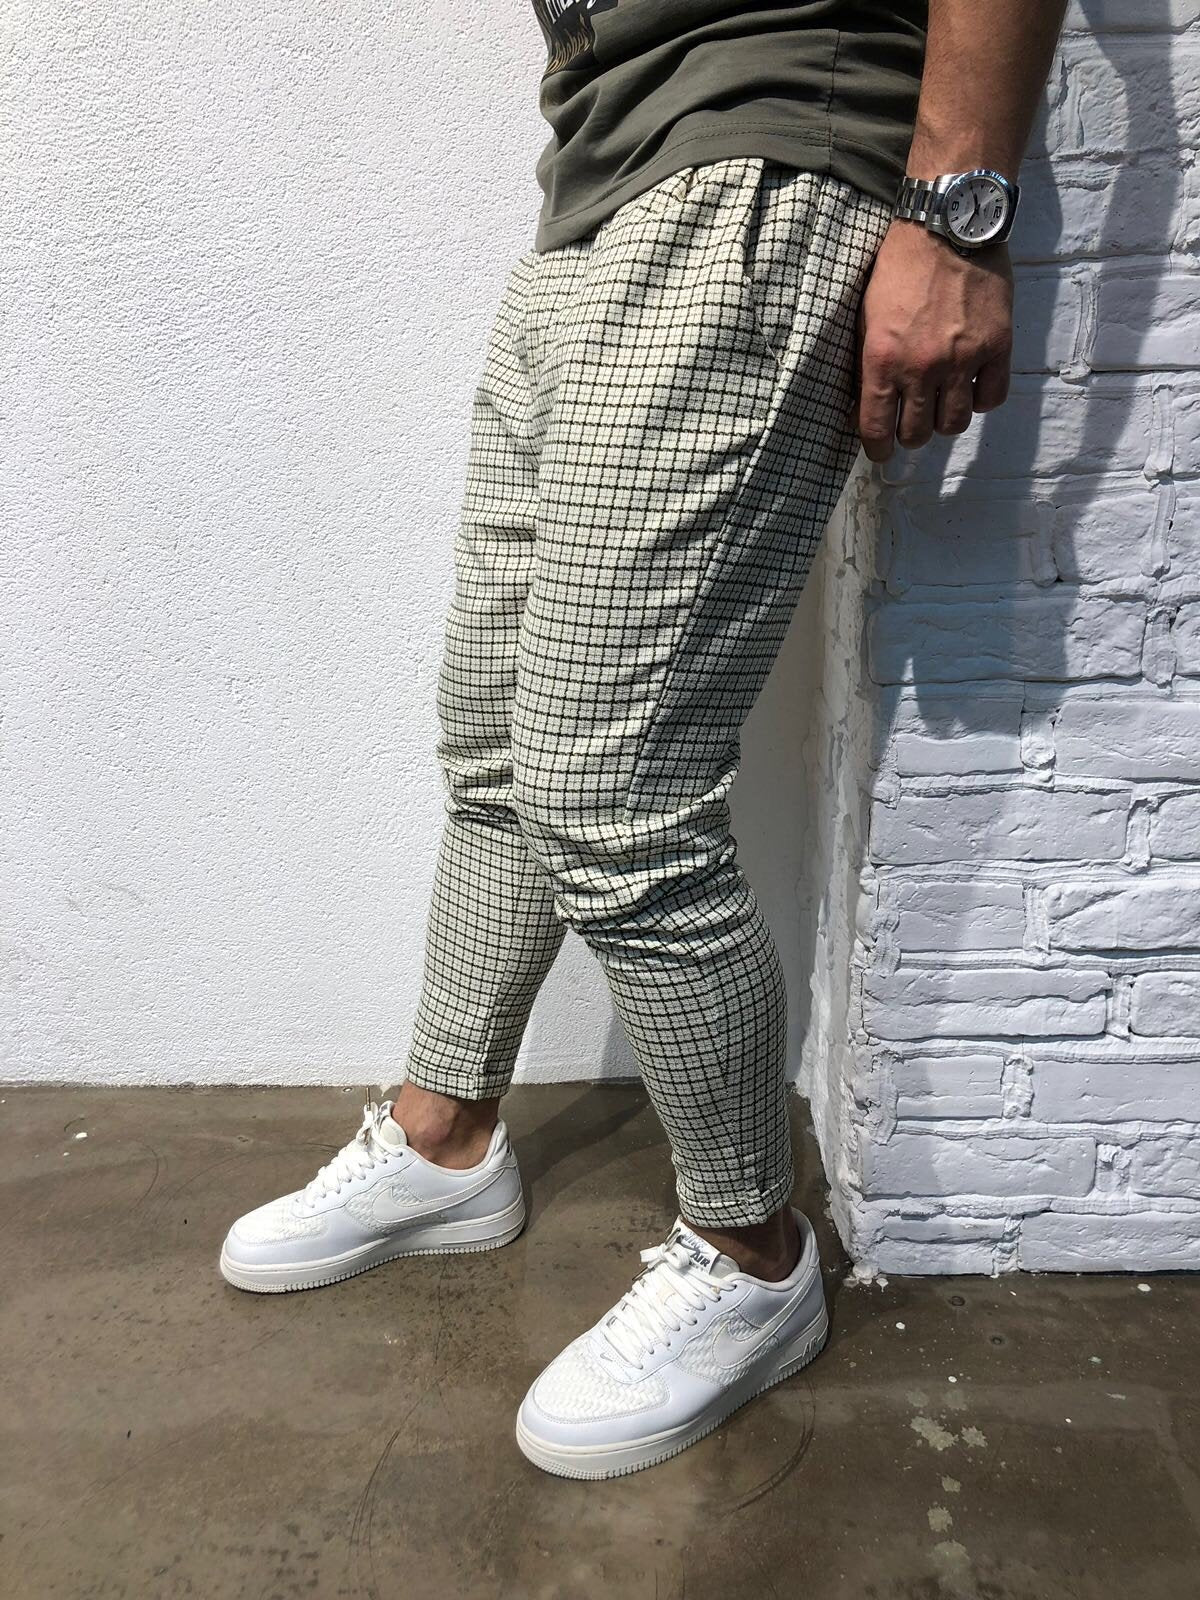 Stylish Men's Grey Plaid Pants Outfit